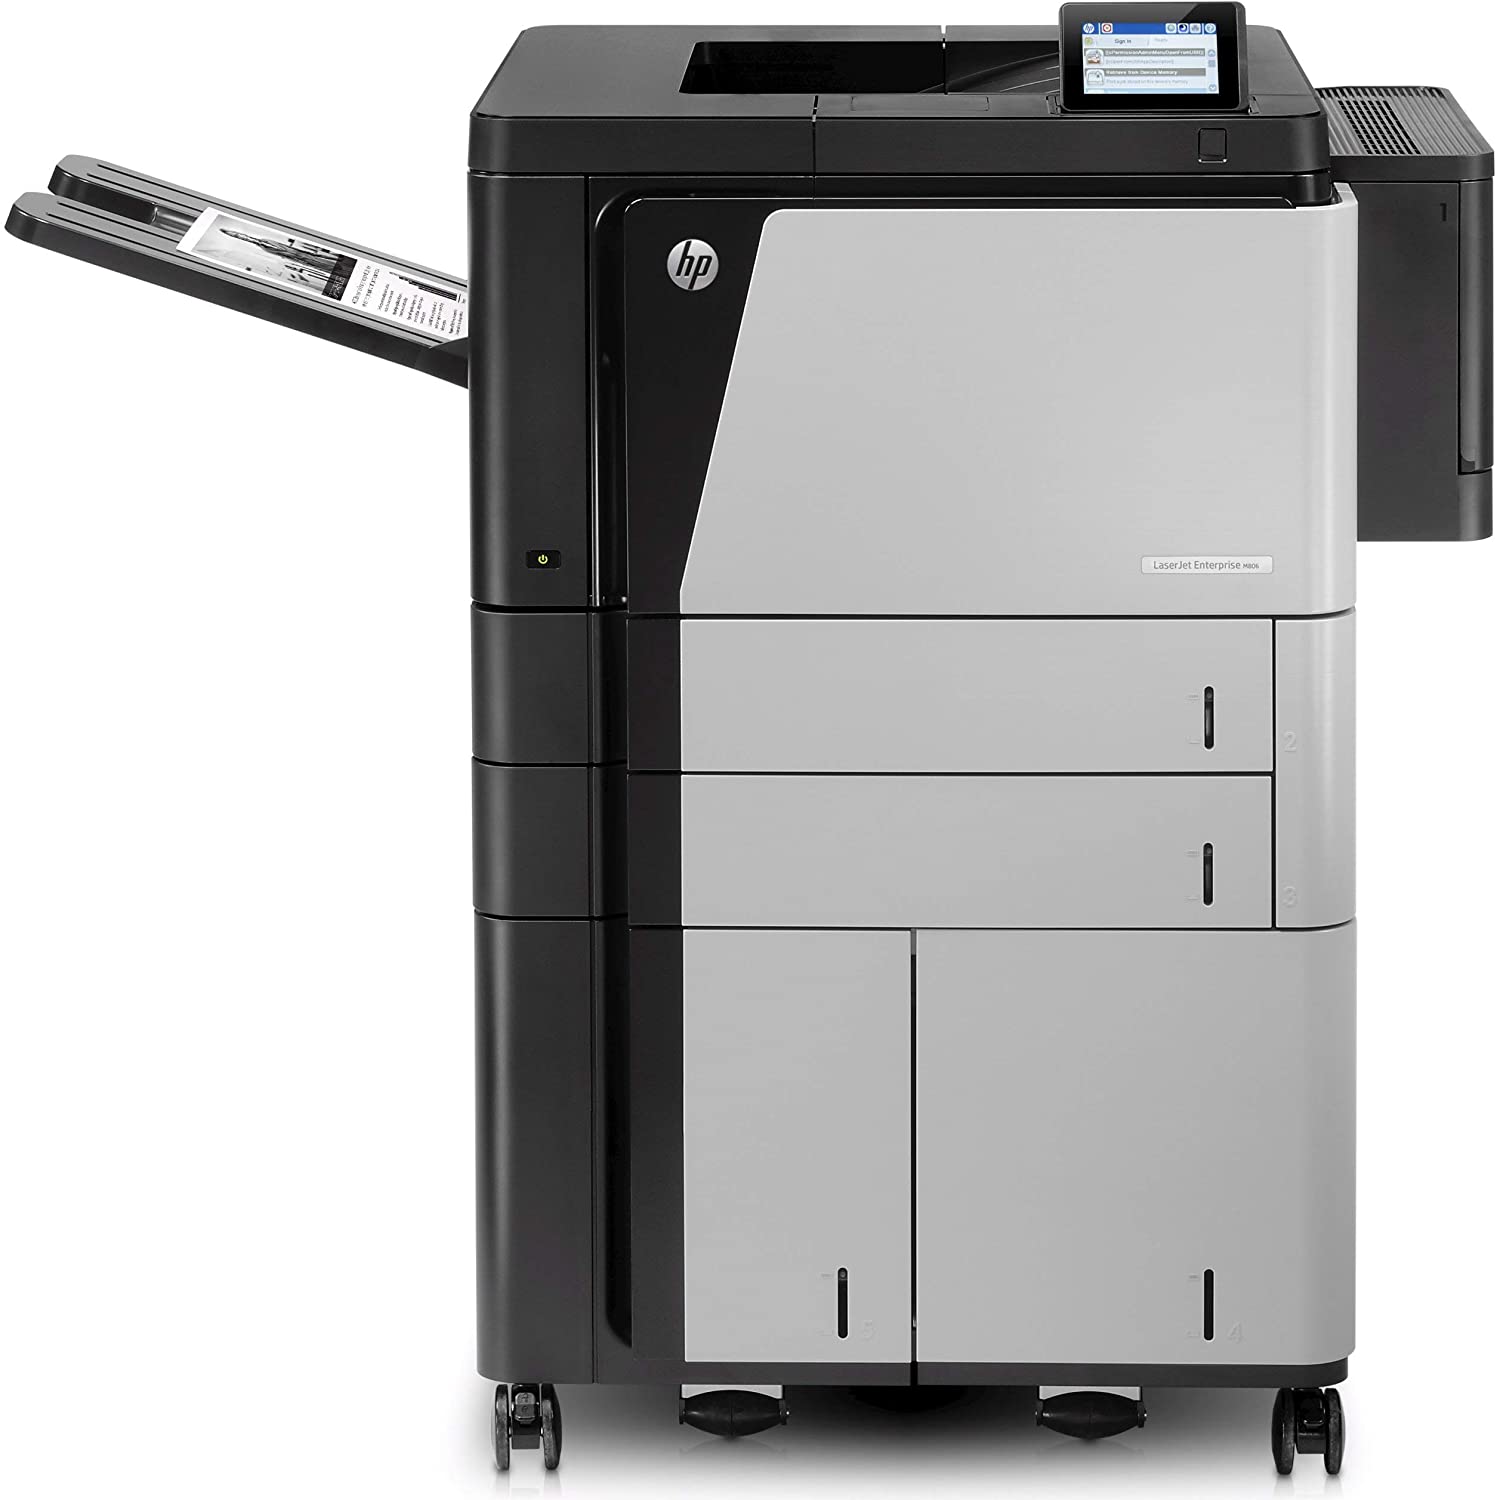 HP LaserJet Enterprise 800 M806X+ Laser Printer Black and White A3 1200x1200 DPI 56 ppm Duplex Automatic Duplex Network